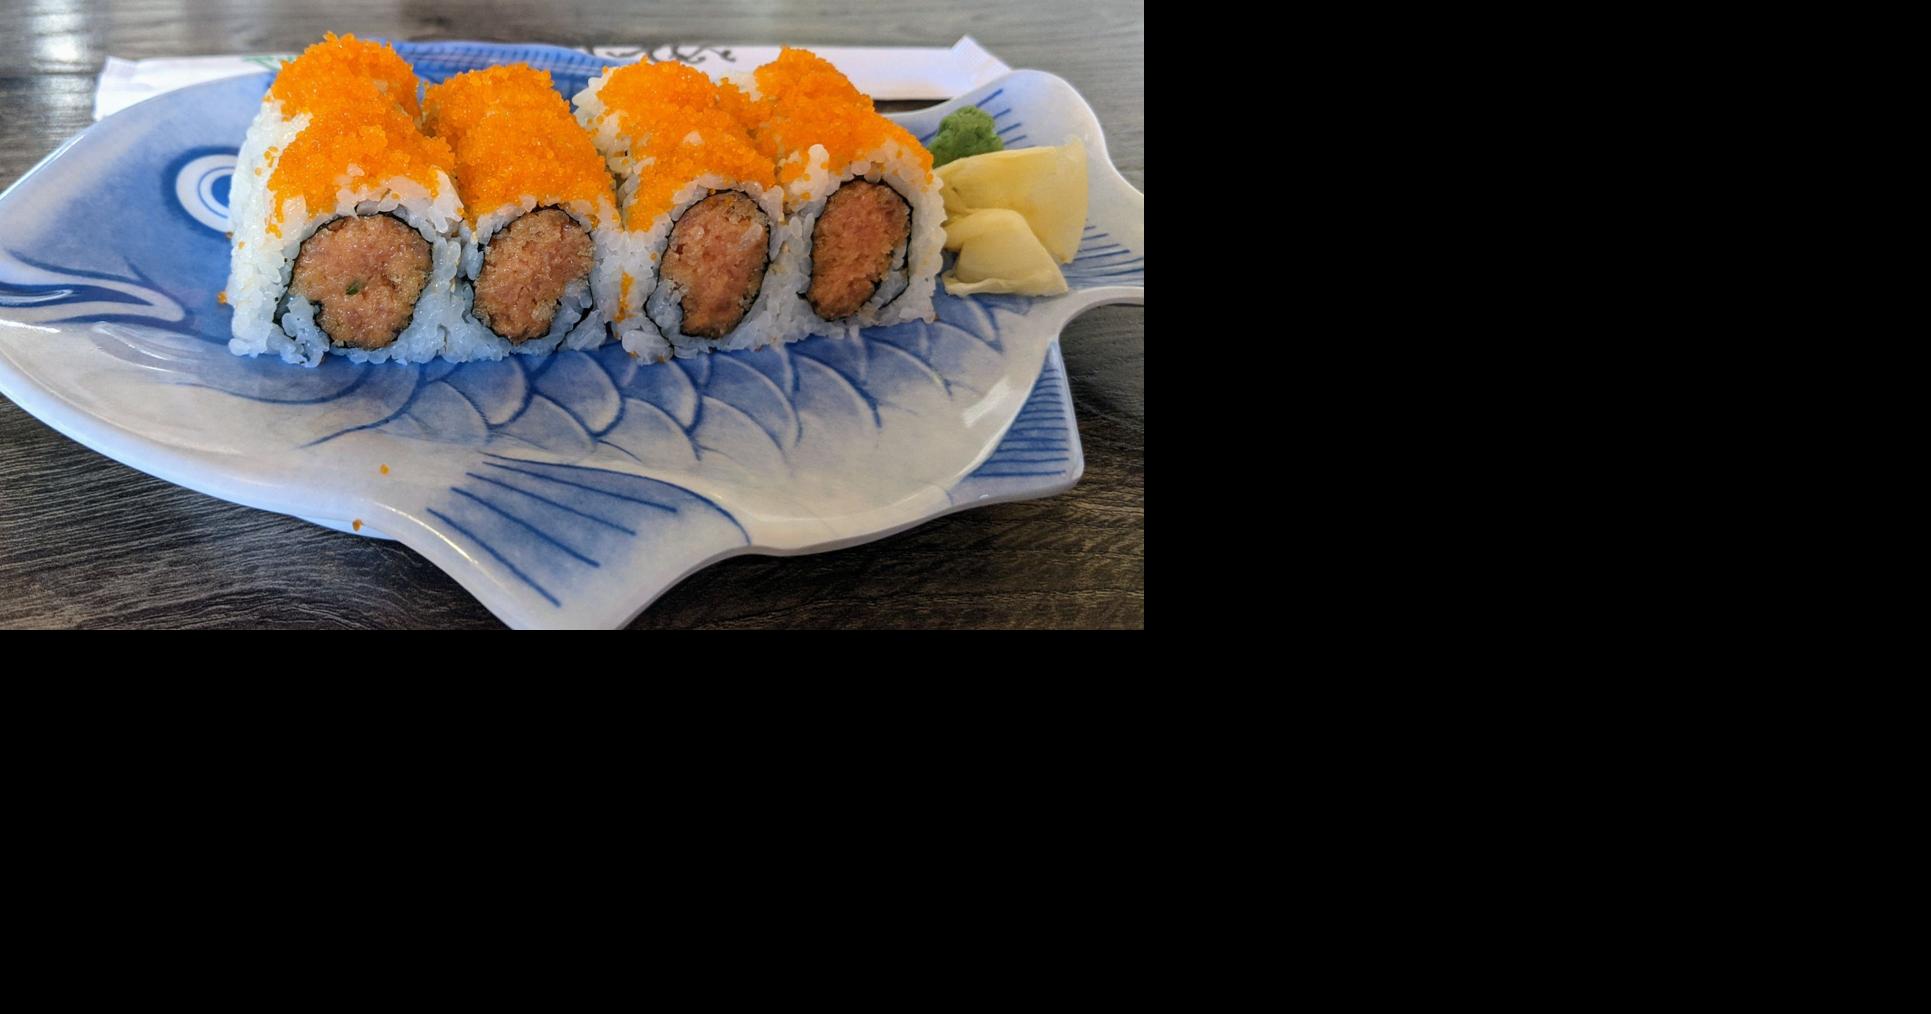 Discerning Diner: Sushi fans can get their fix at Kanagawa in Mechanicsburg